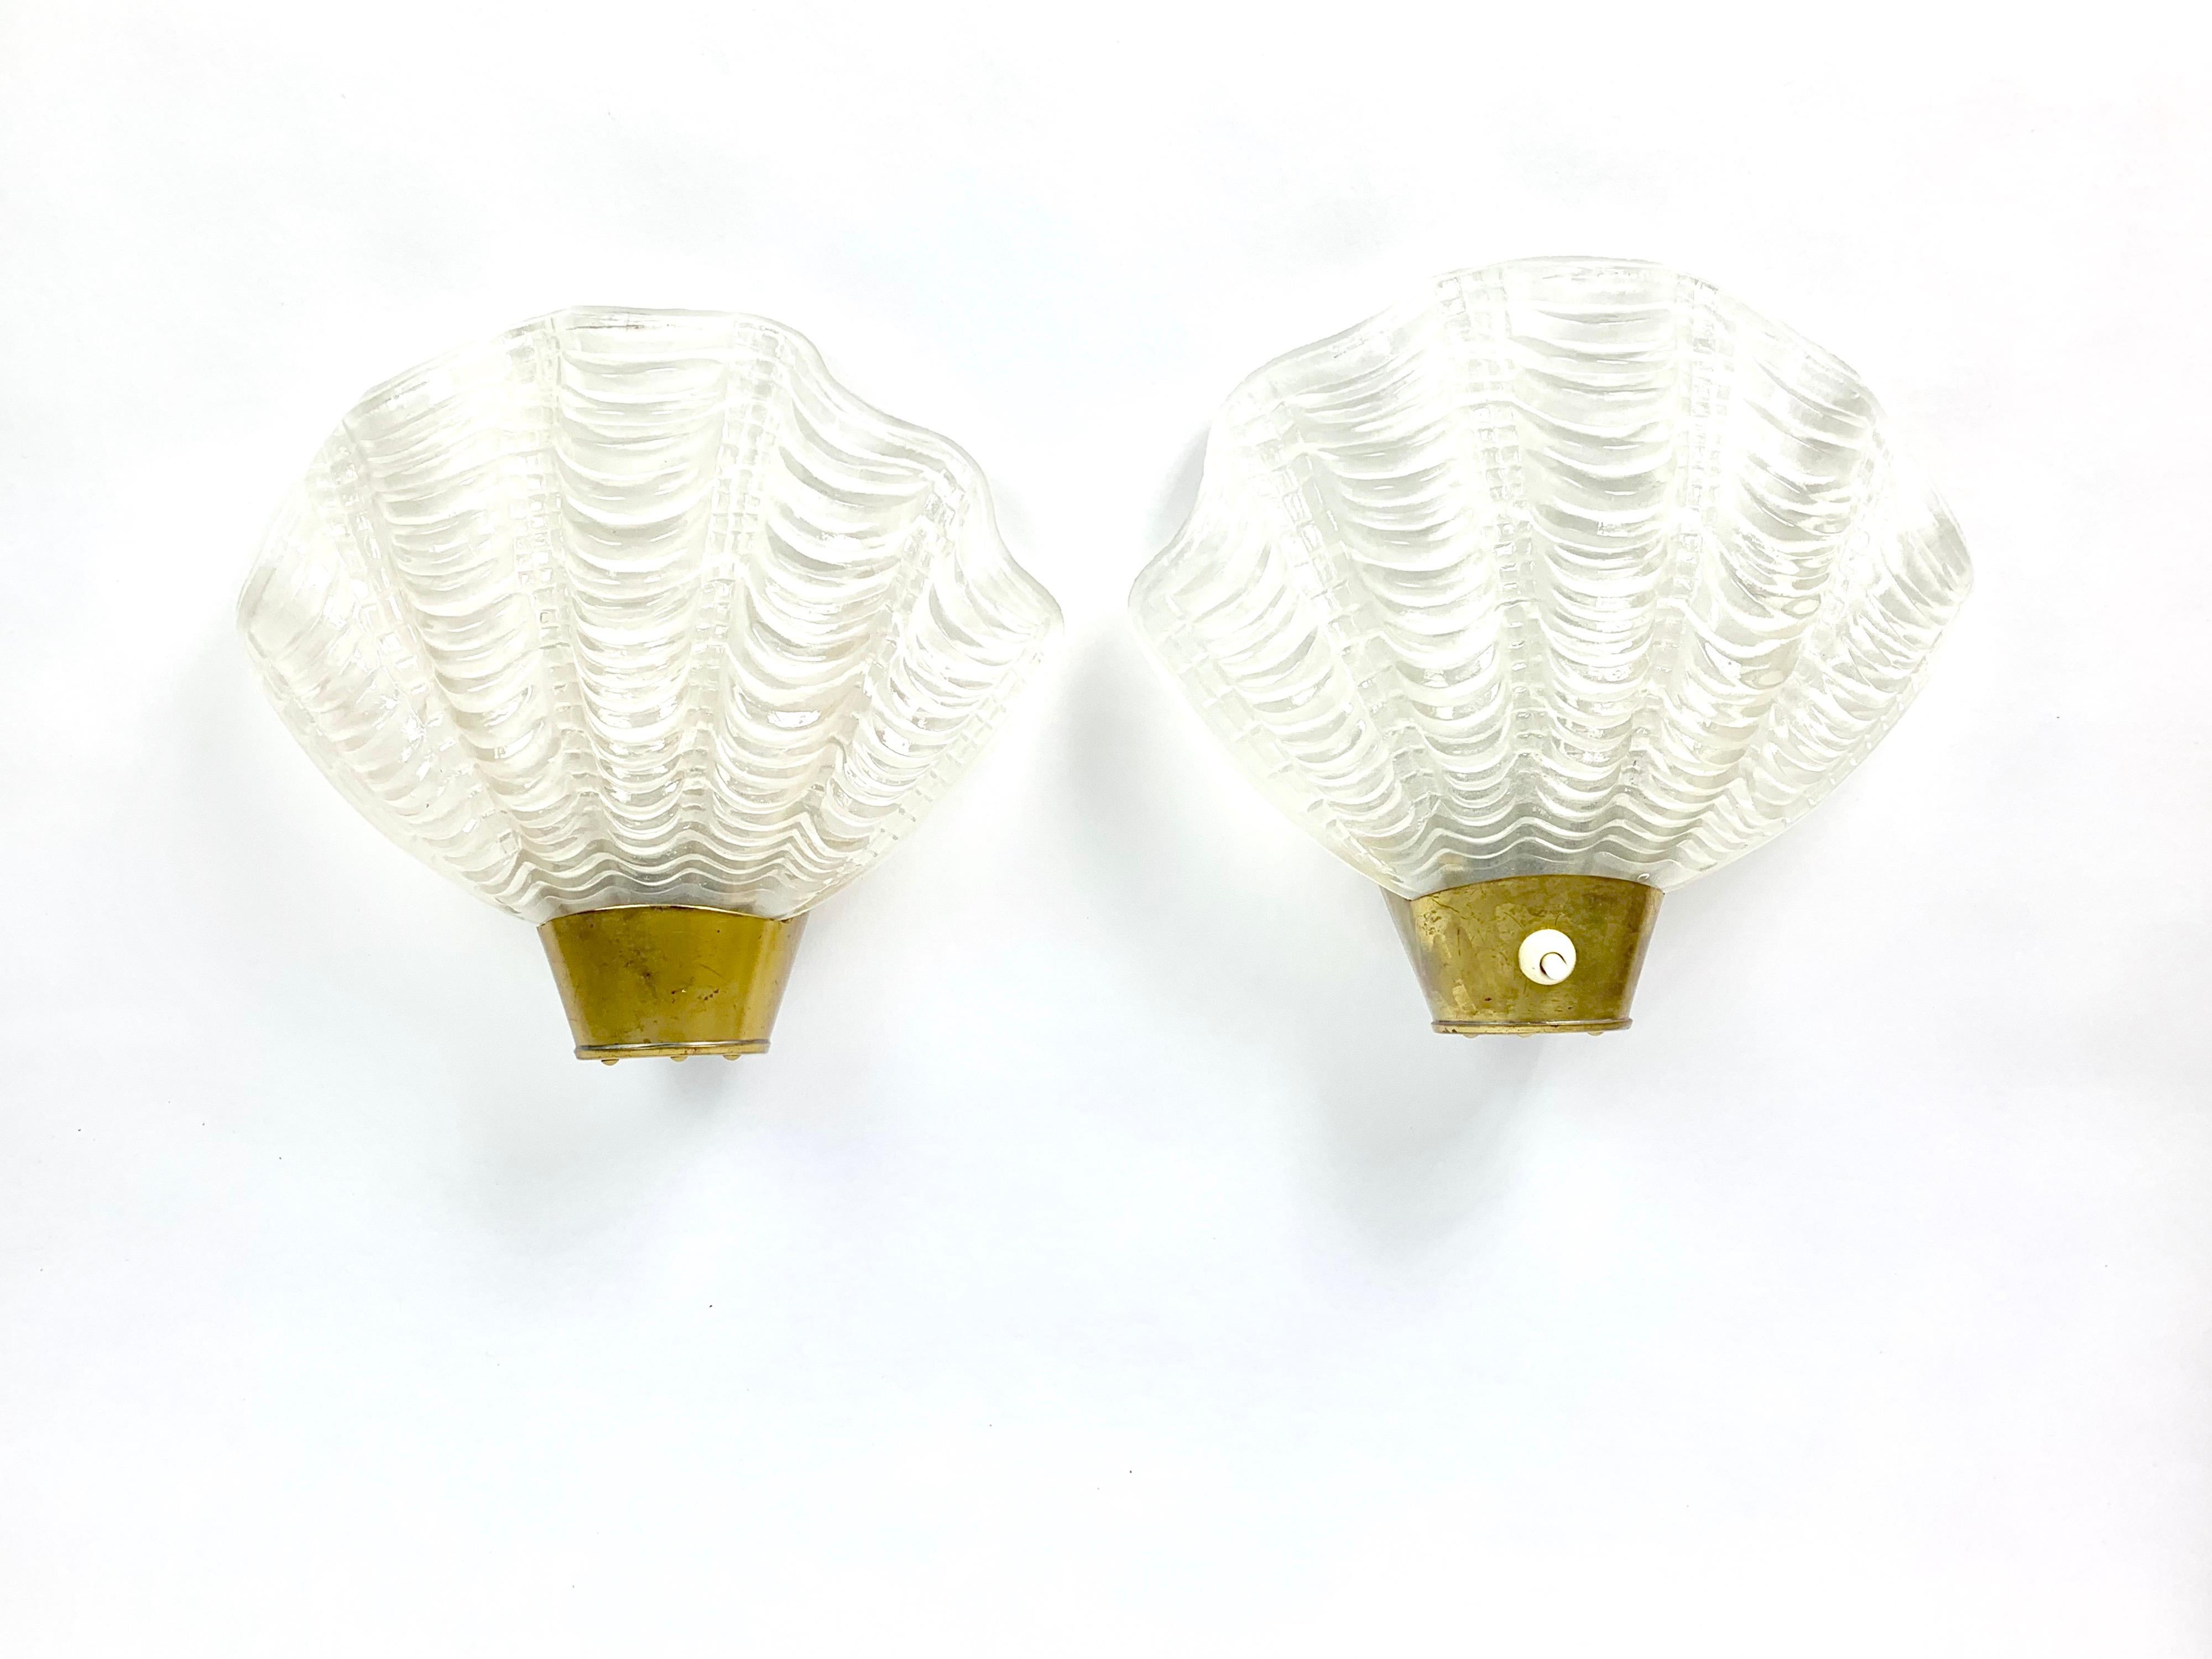 Muschel-Wandleuchter, Sockel aus Messing mit abnehmbarem Glasschirm in Muschelform